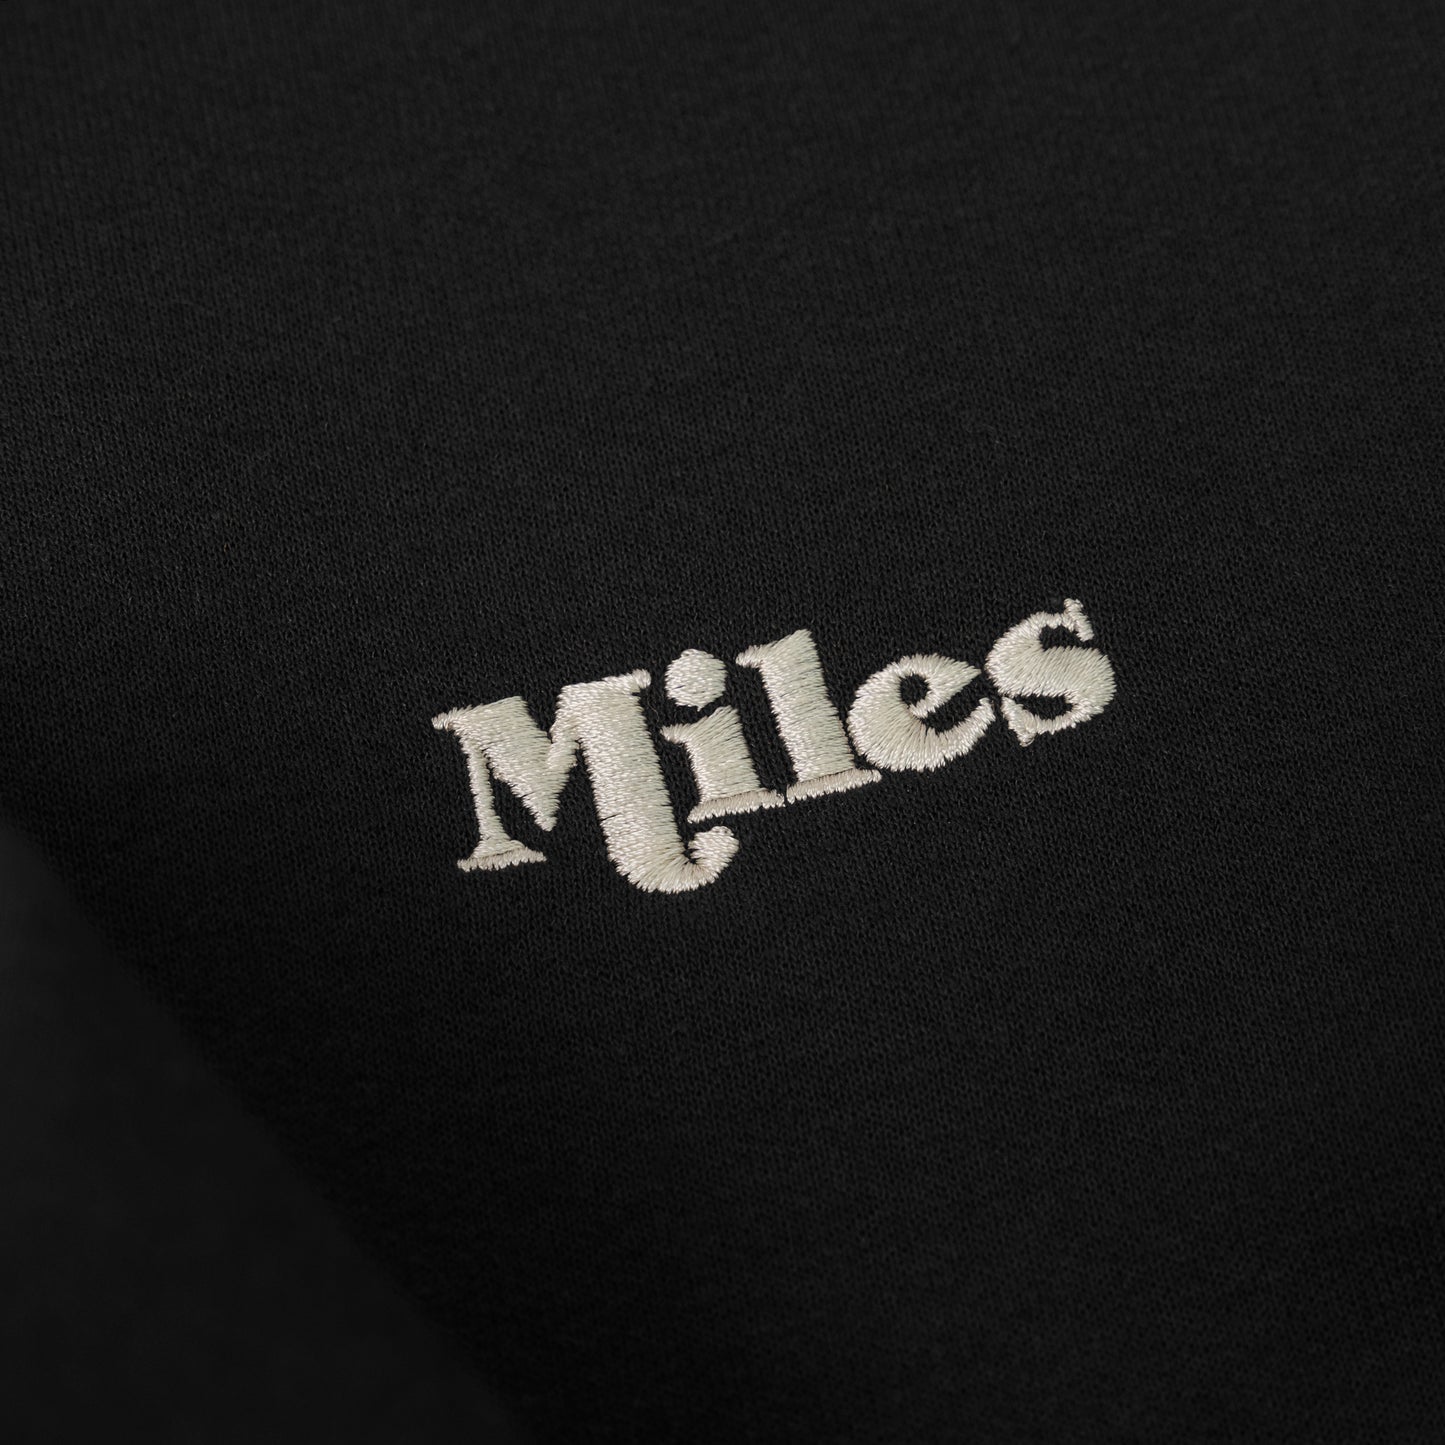 Miles Classic Logo Hoodie – Black